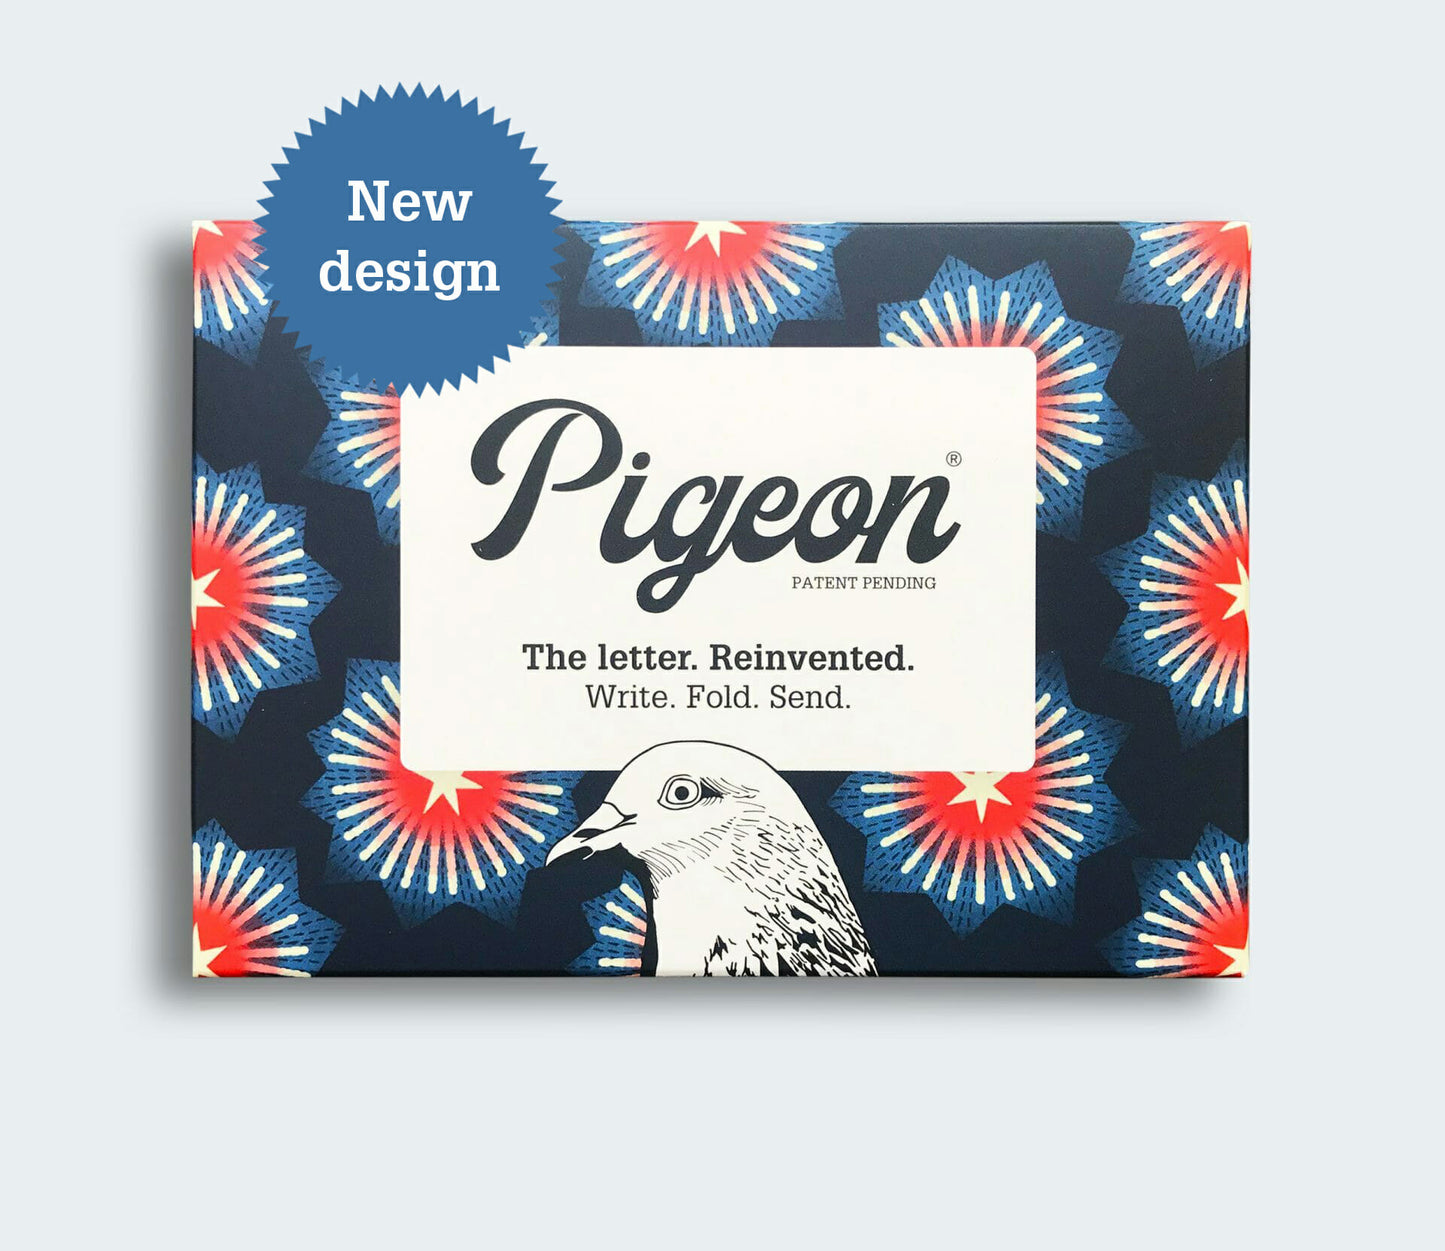 Starburst Pigeon Pack